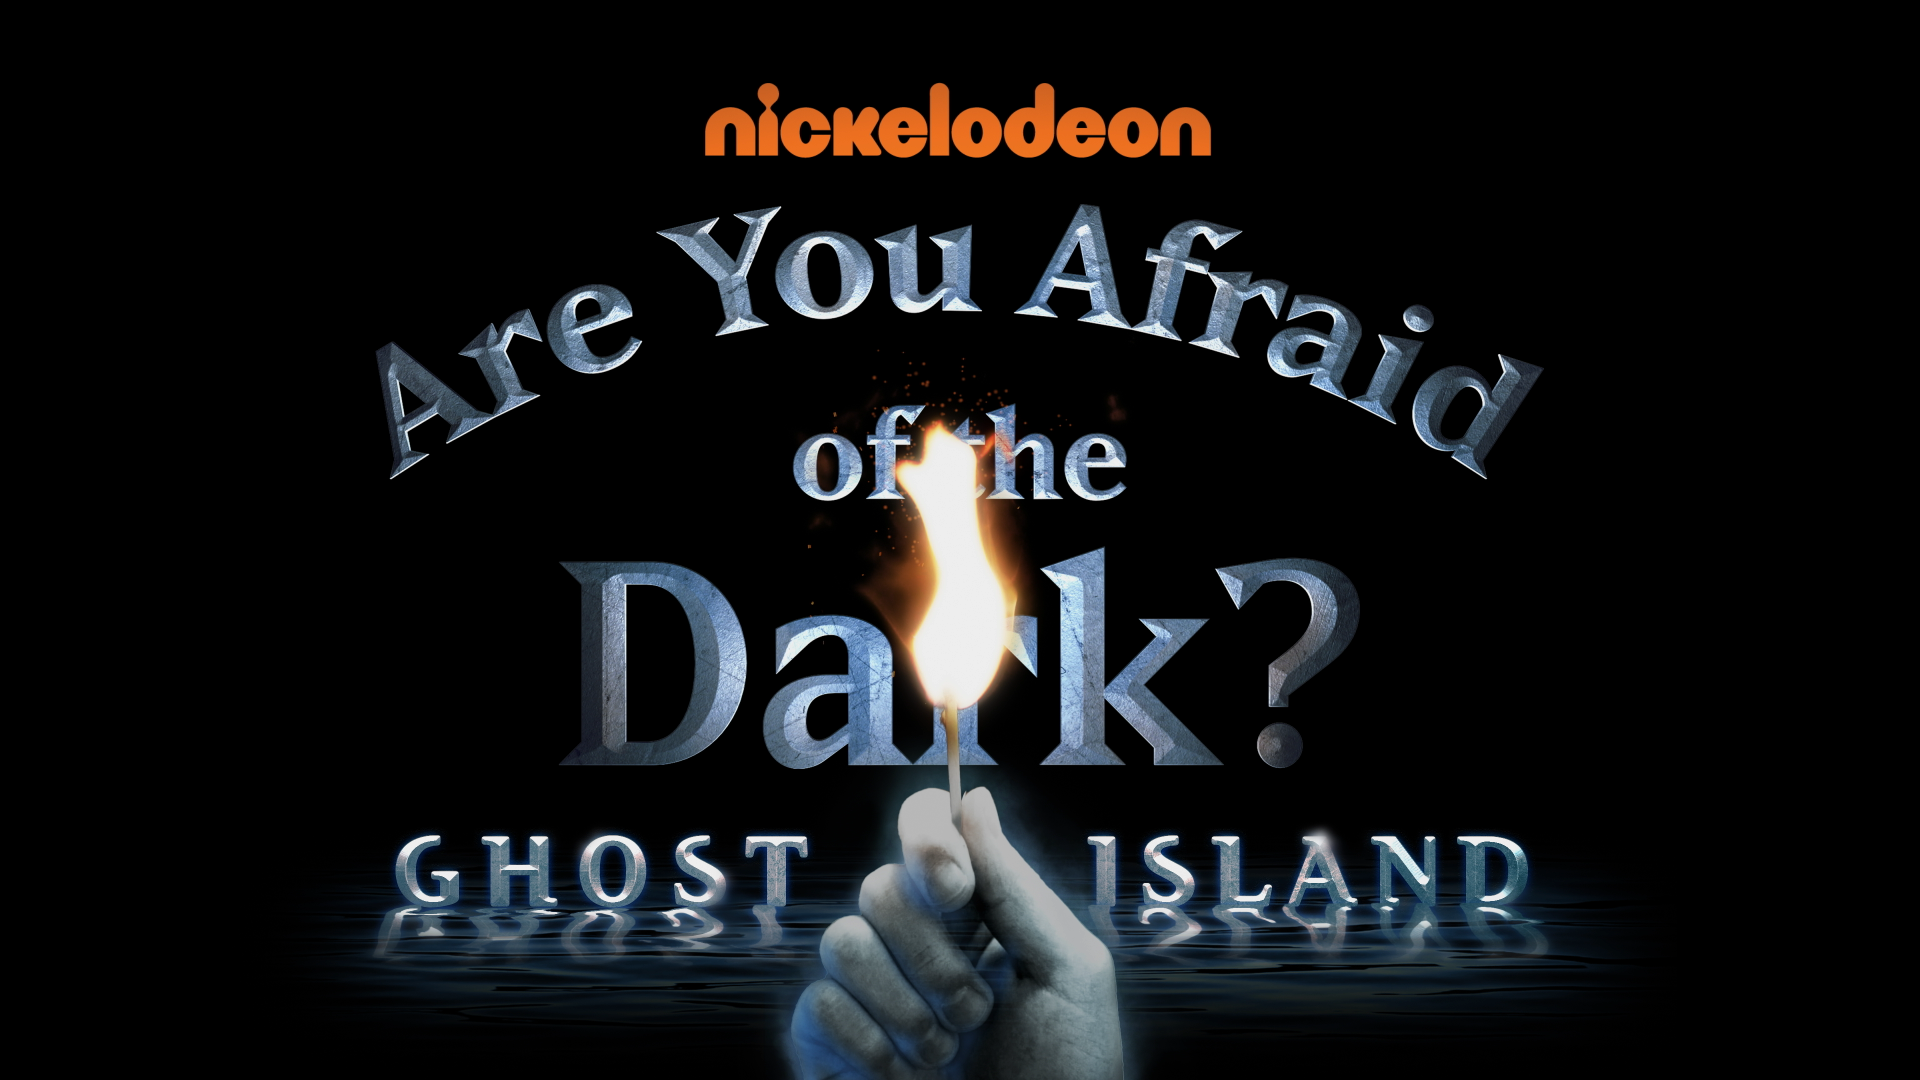 are you afraid of the dark logo